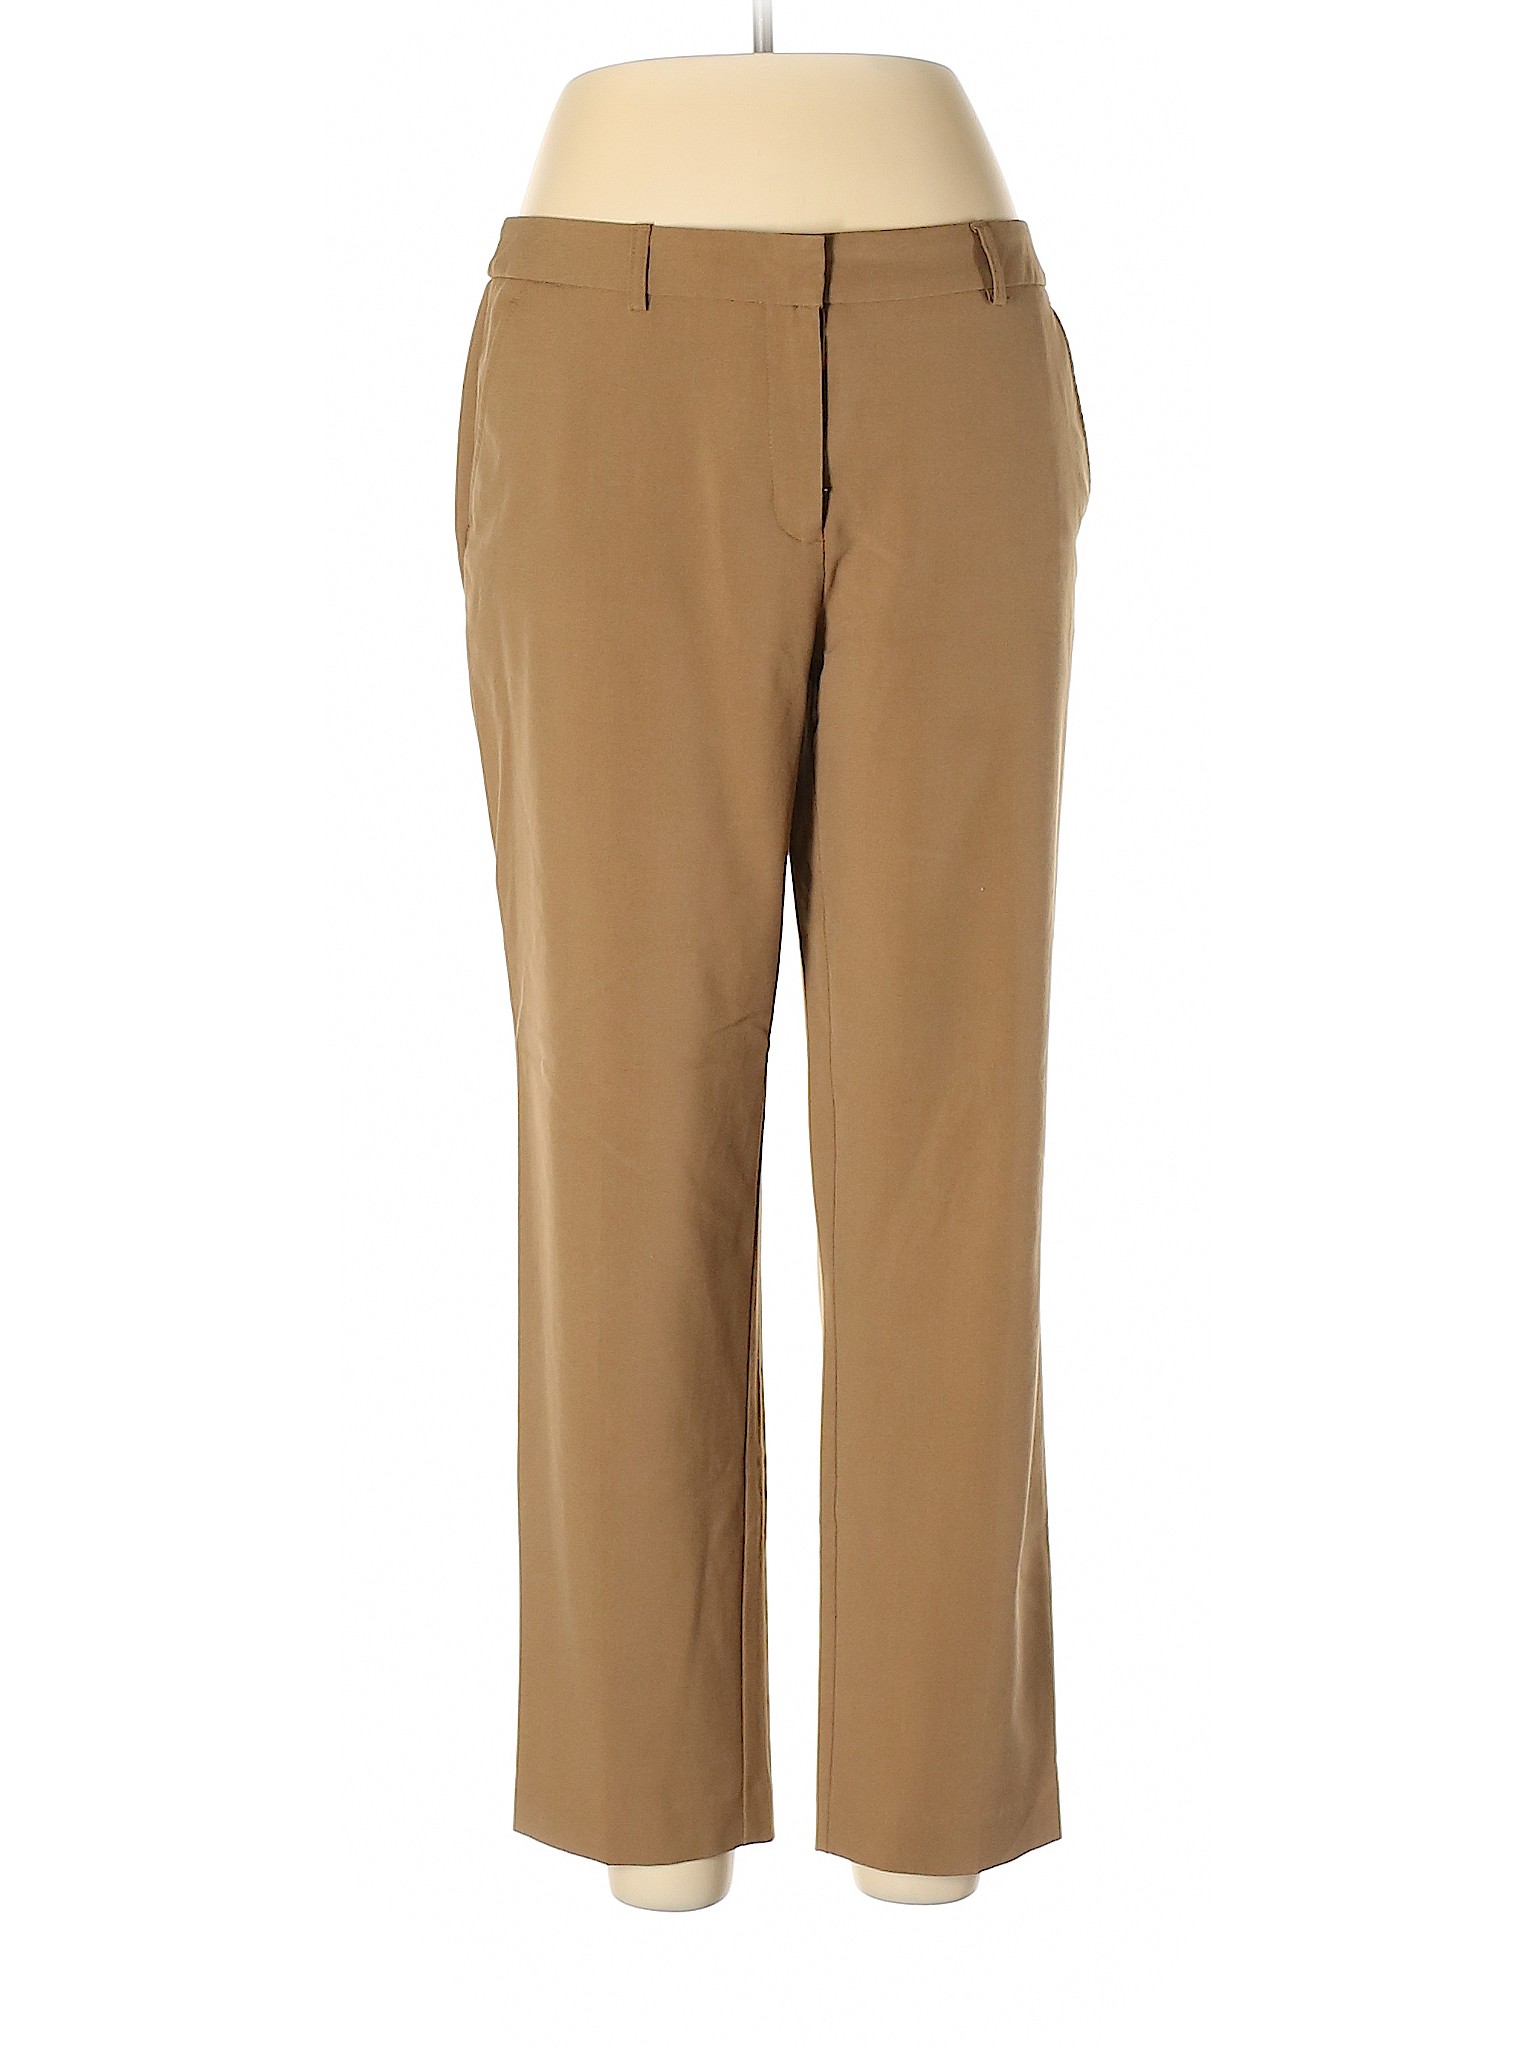 George Women Brown Dress Pants 10 | eBay